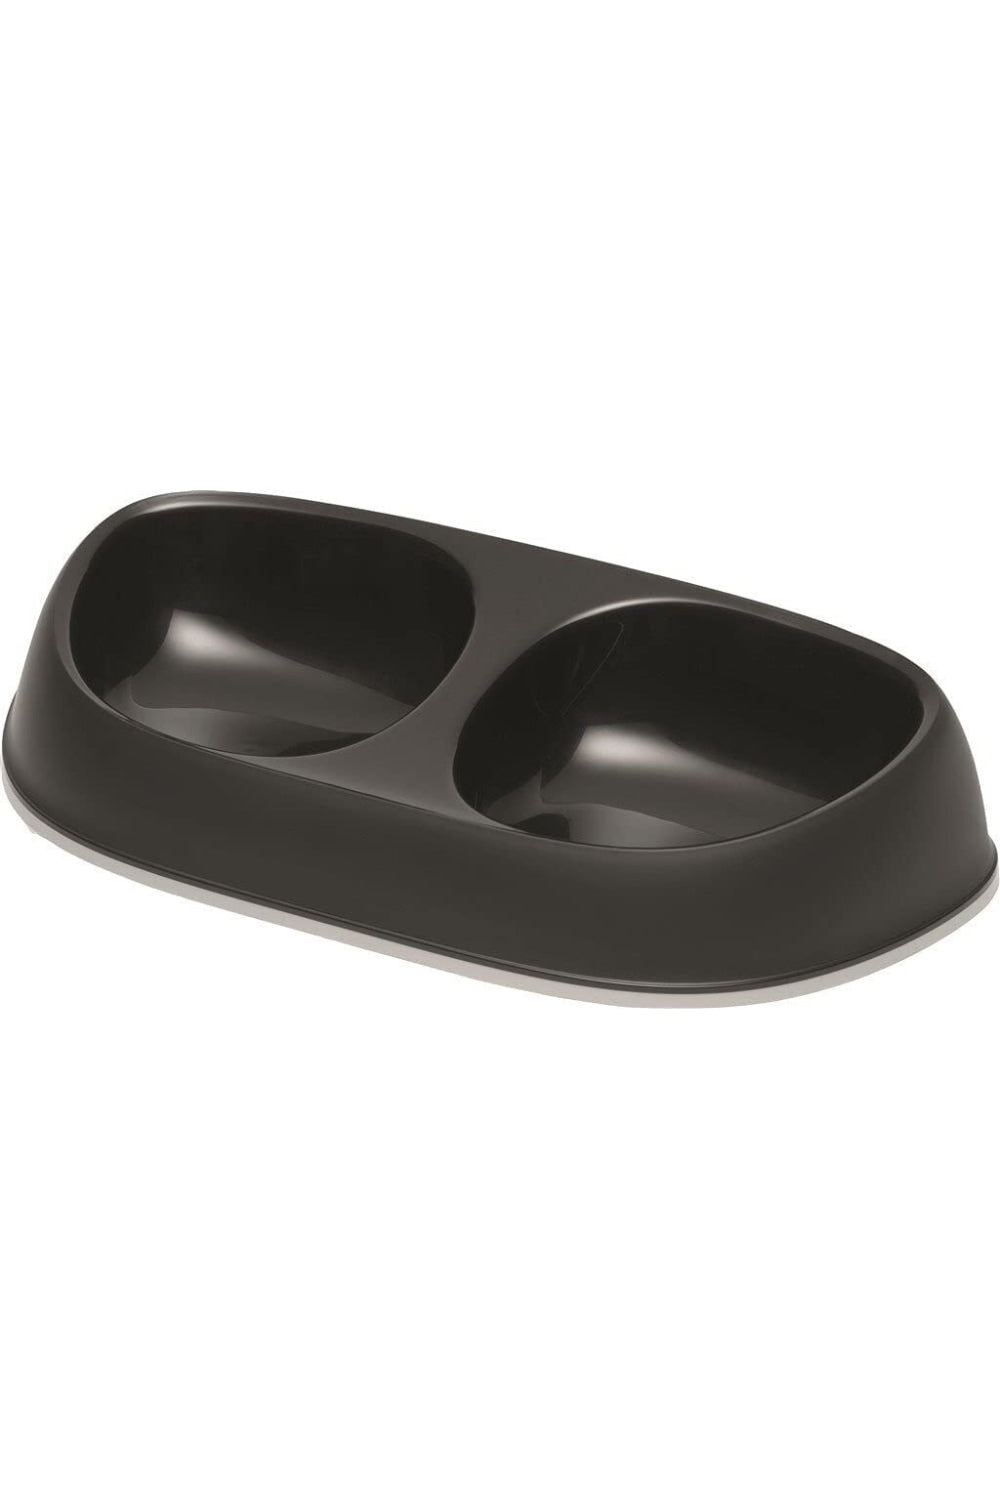 Moderna Sensibowl Dog Bowl (Black) (0.7pint)